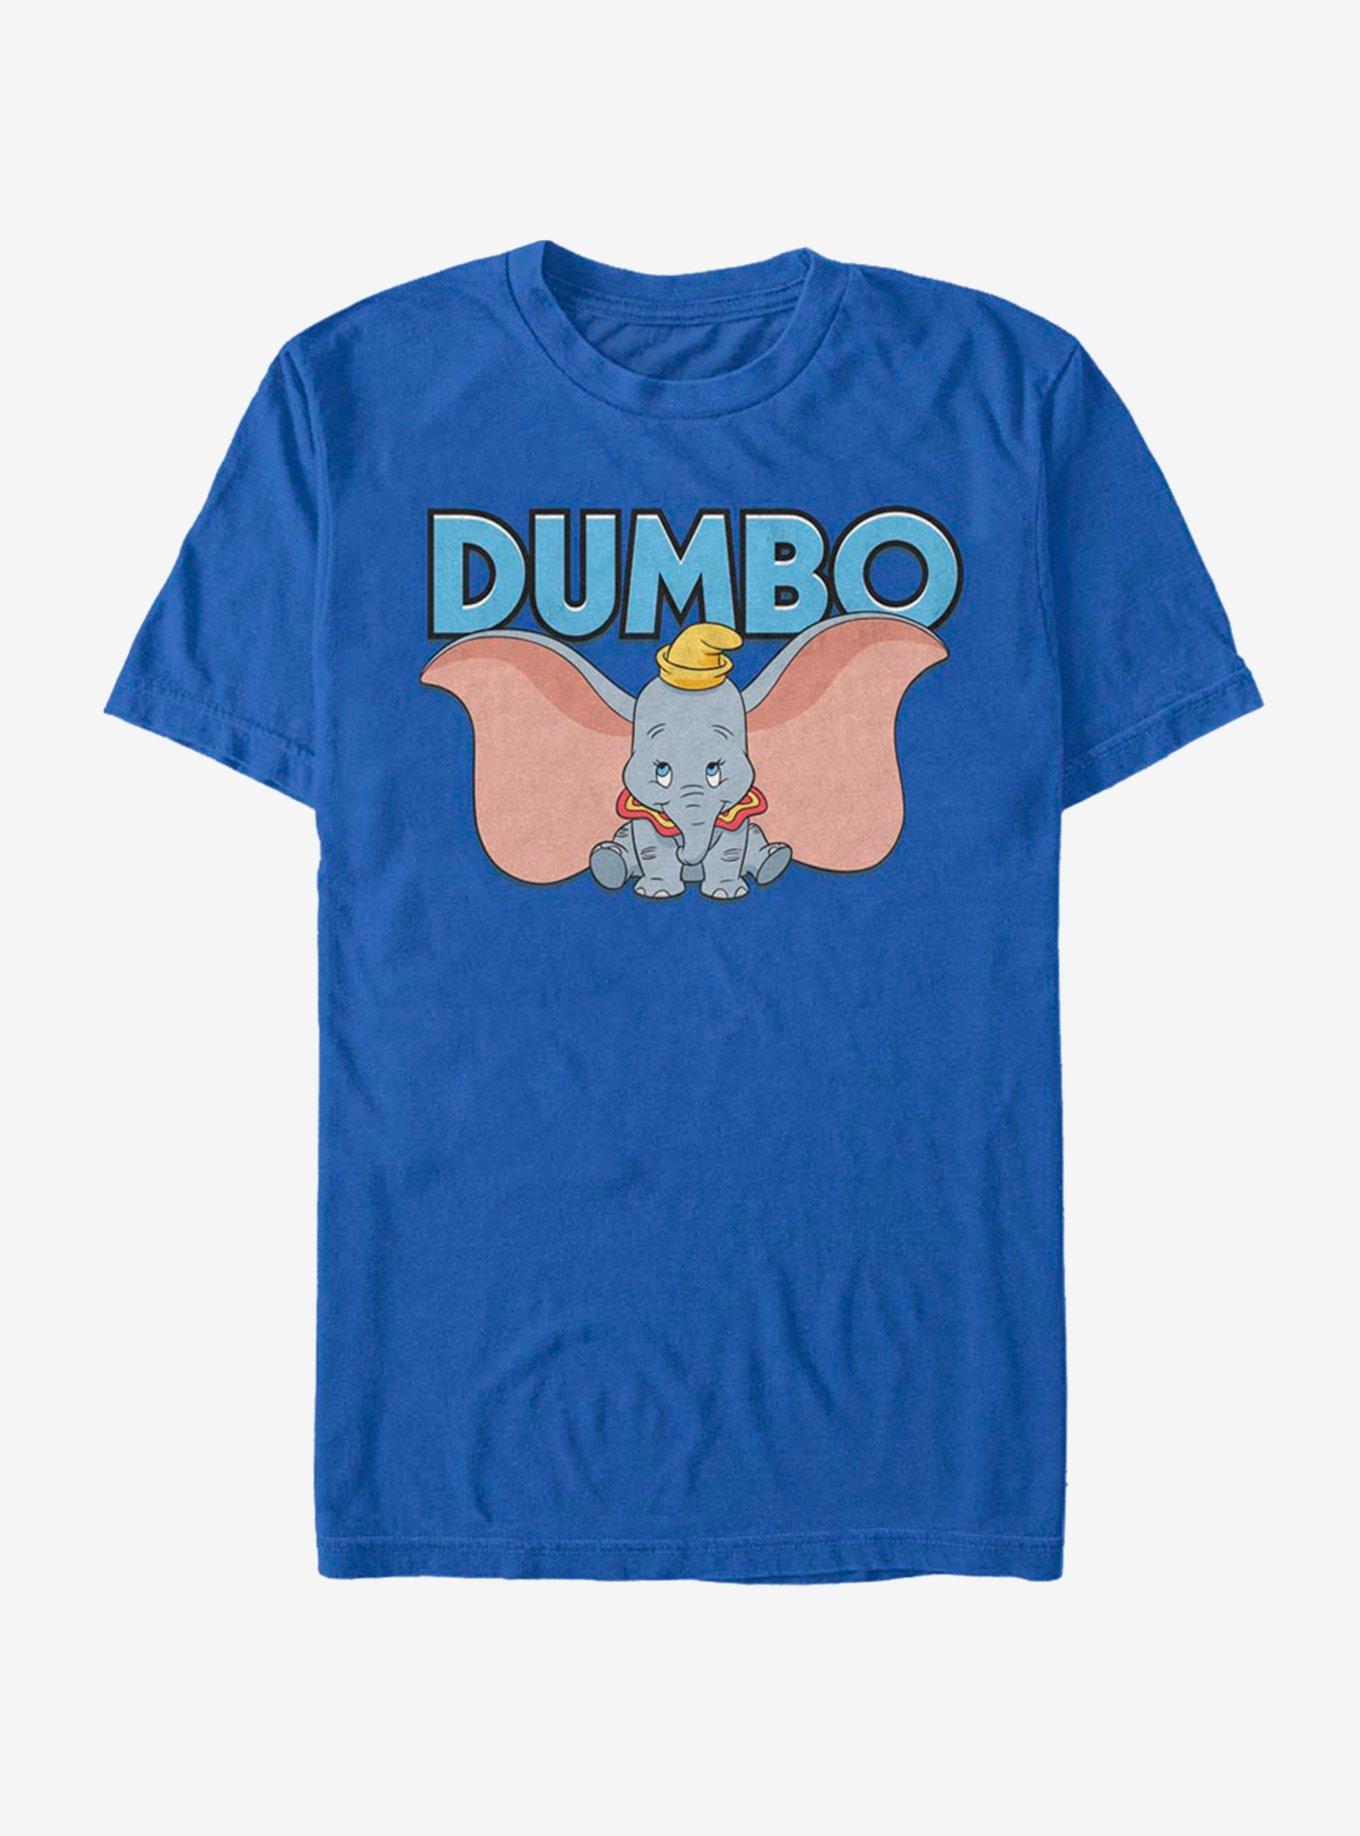 Disney Dumbo Those Ears T-Shirt, ROYAL, hi-res